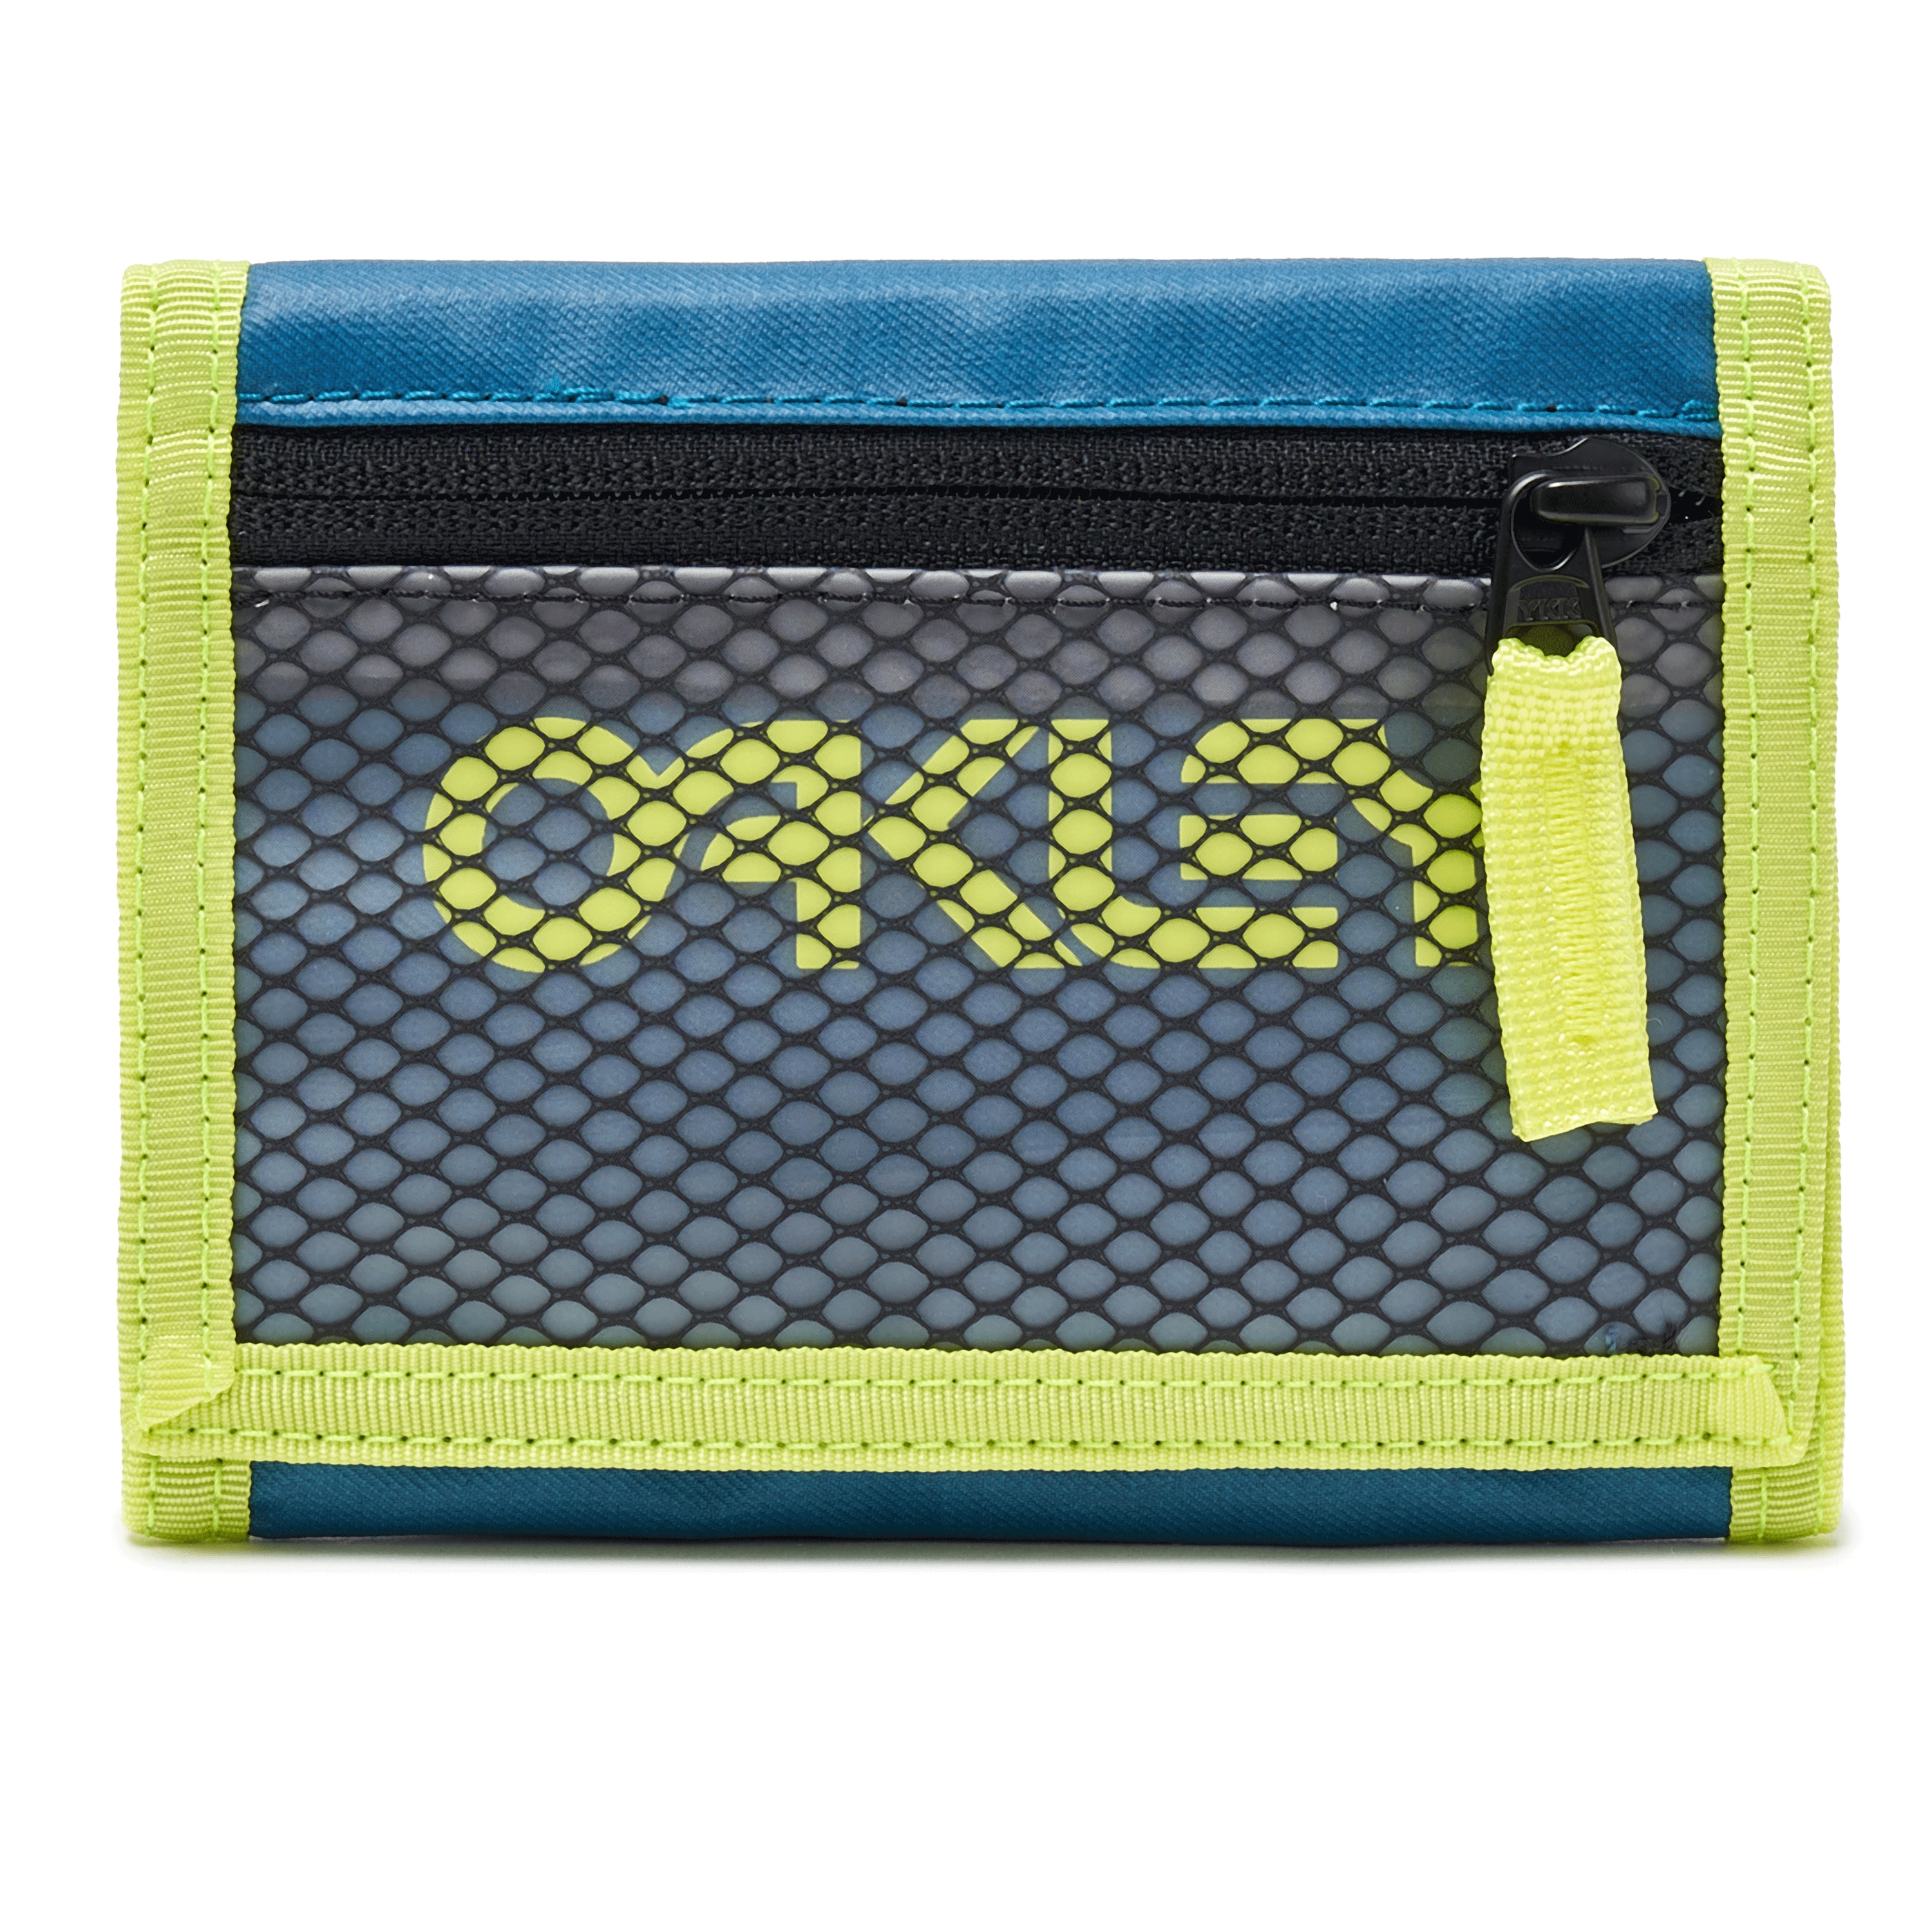 oakley wallet canada